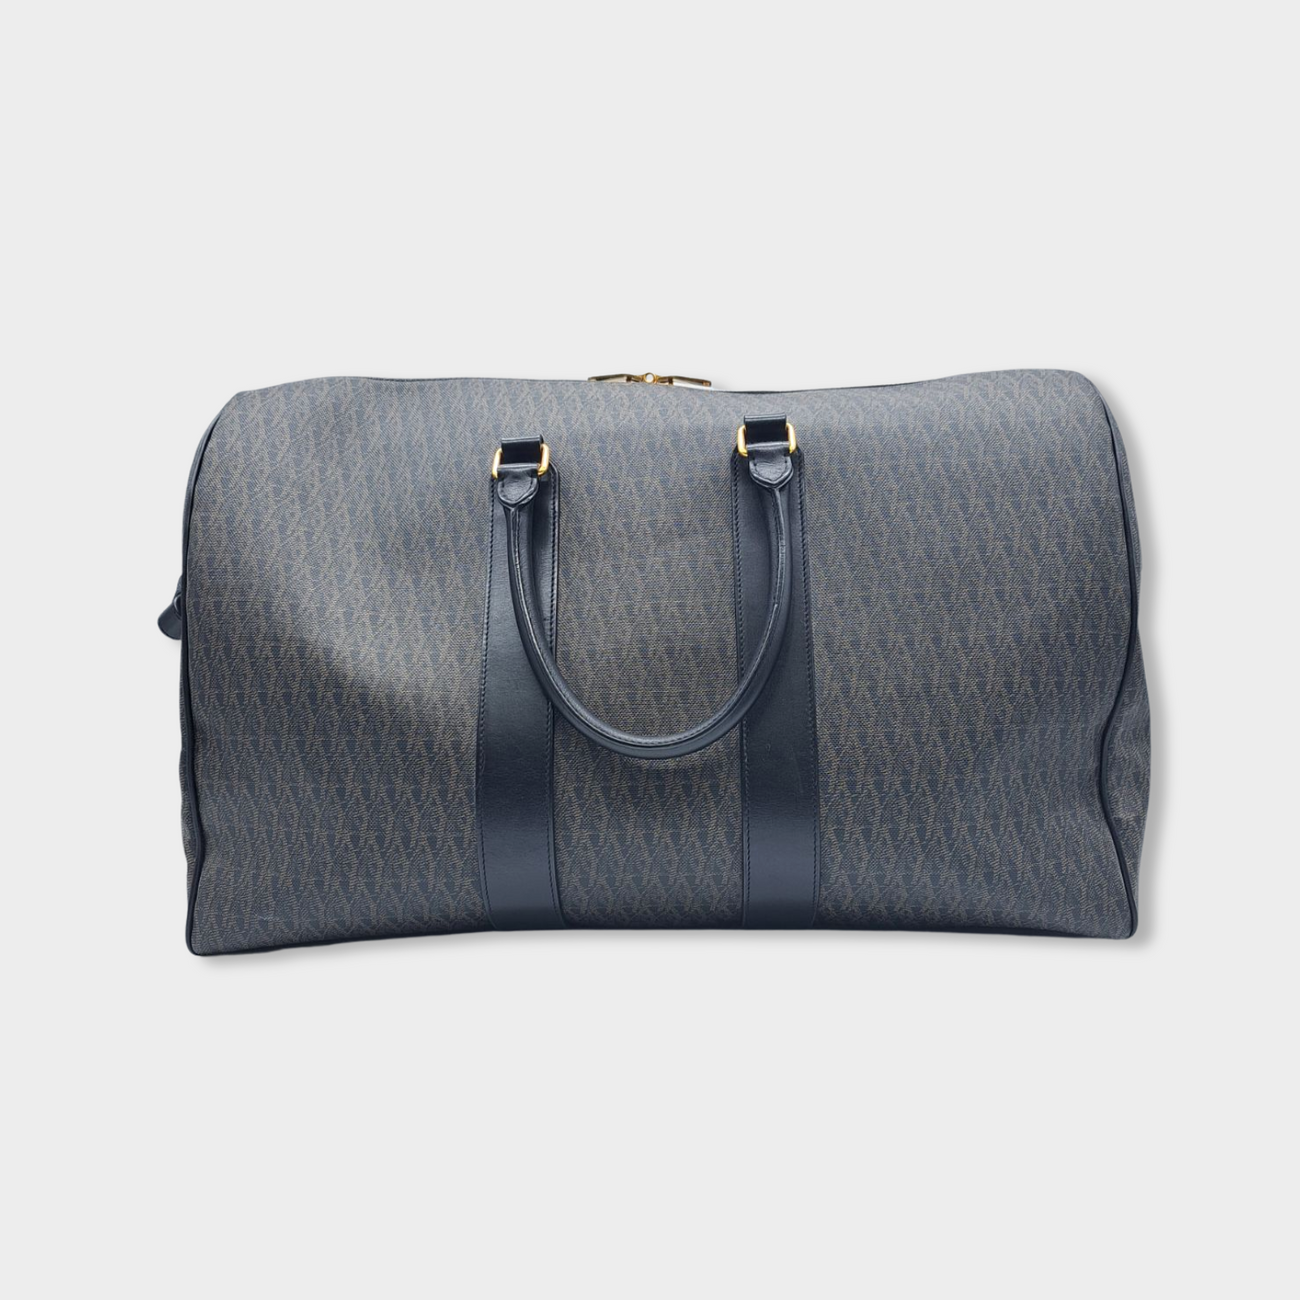 SAINT LAURENT DUFFEL BAG WITH LOGO, Second Hand Louis Vuitton Keepall Bags